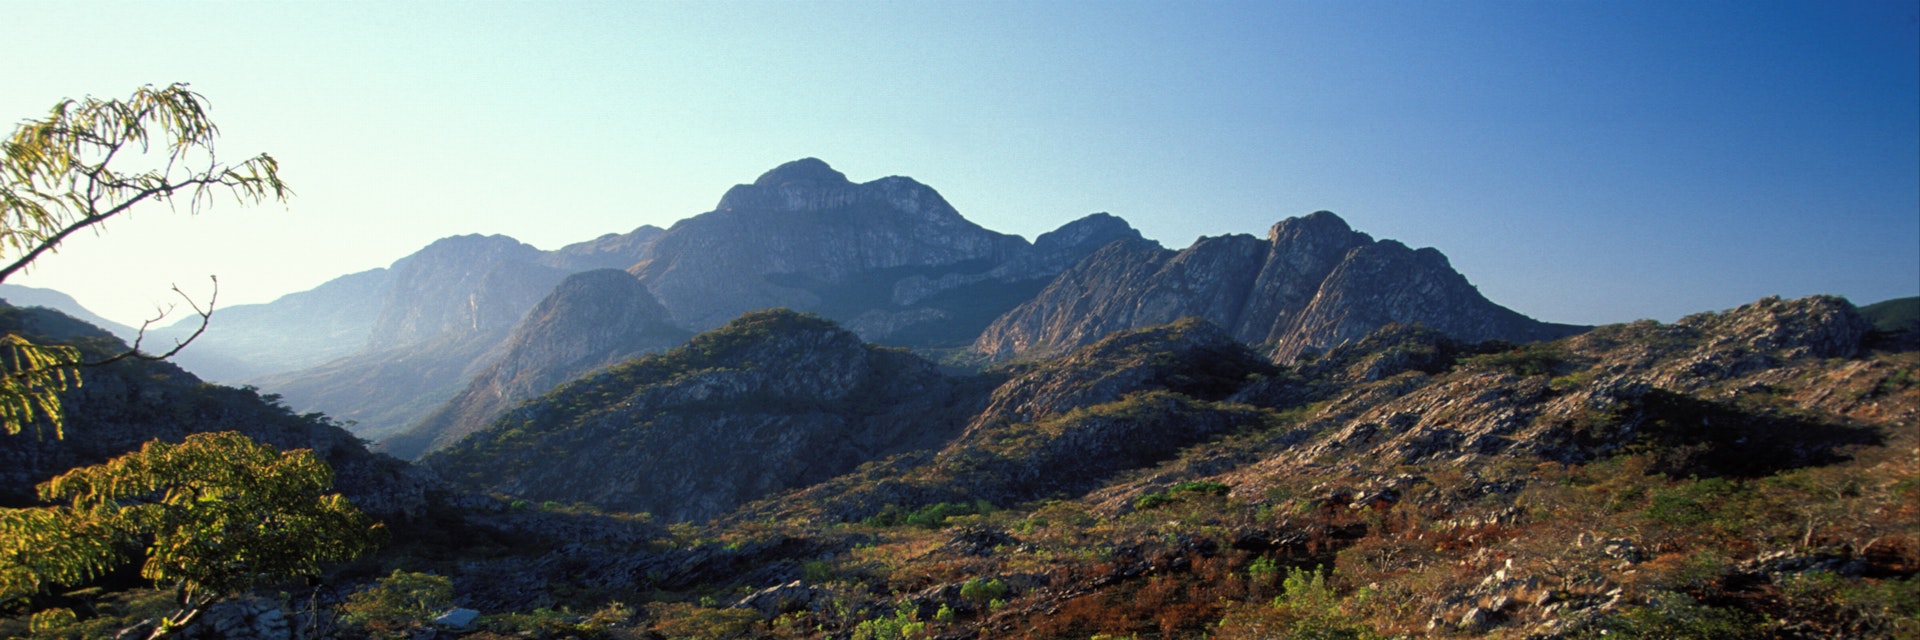 Chimanimani Mountains, Chimanimani, Manicaland, Zimbabwe